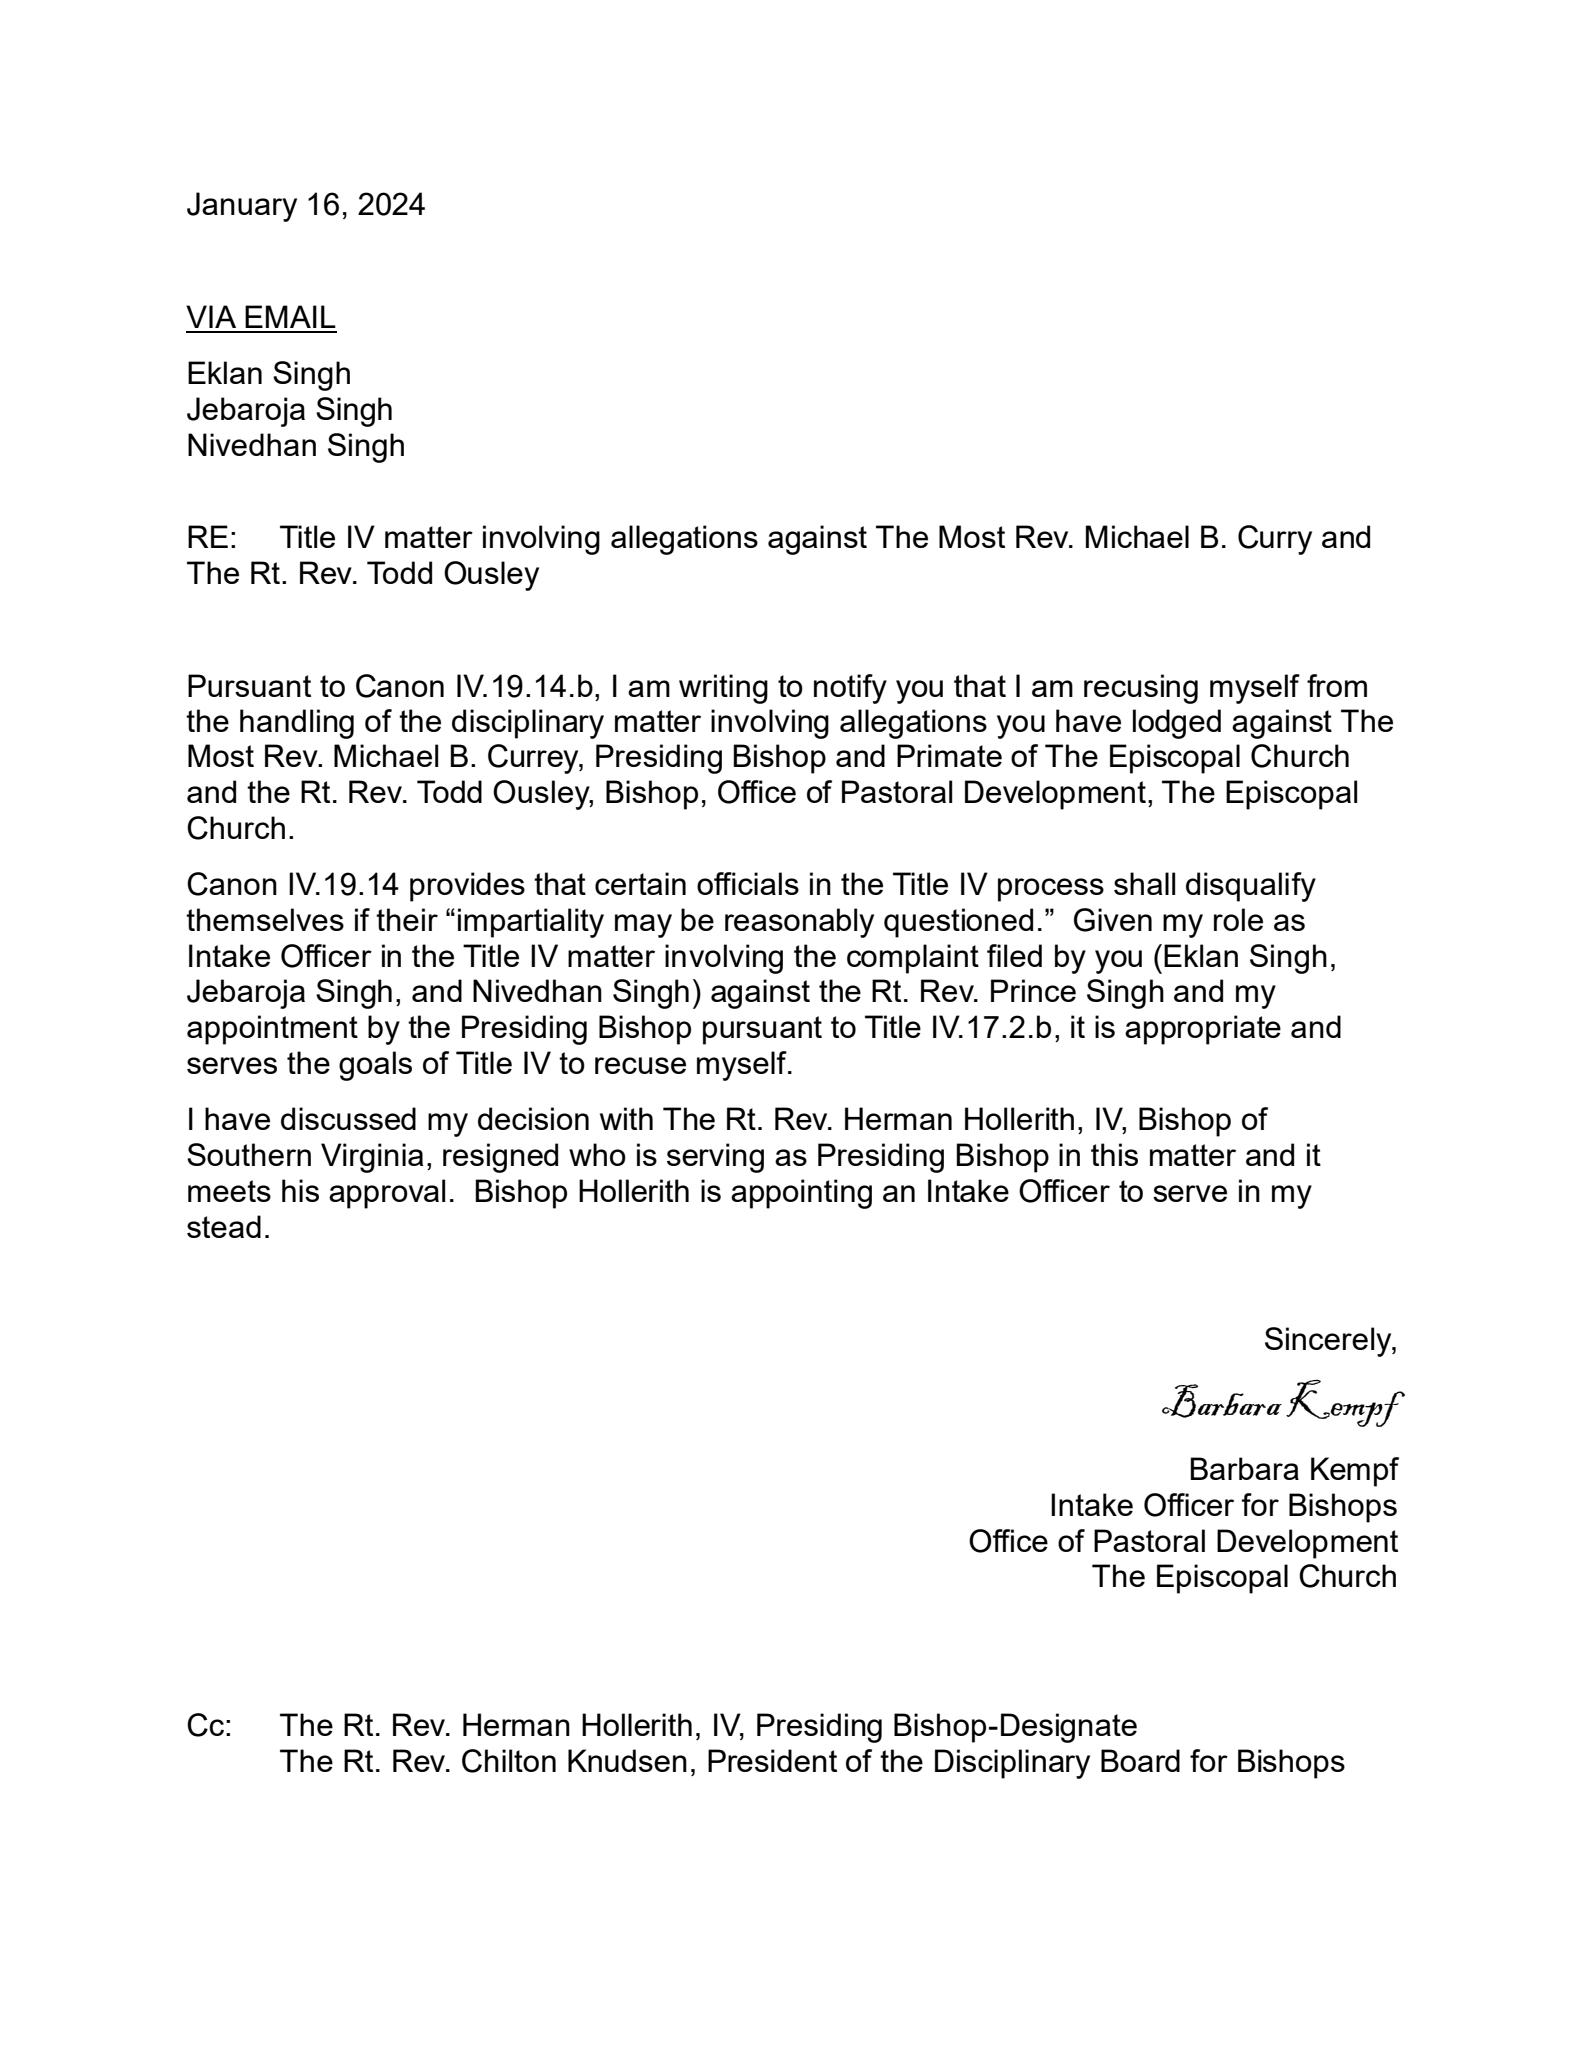 January 16, 2024 letter from Rev. Barbara Kempf